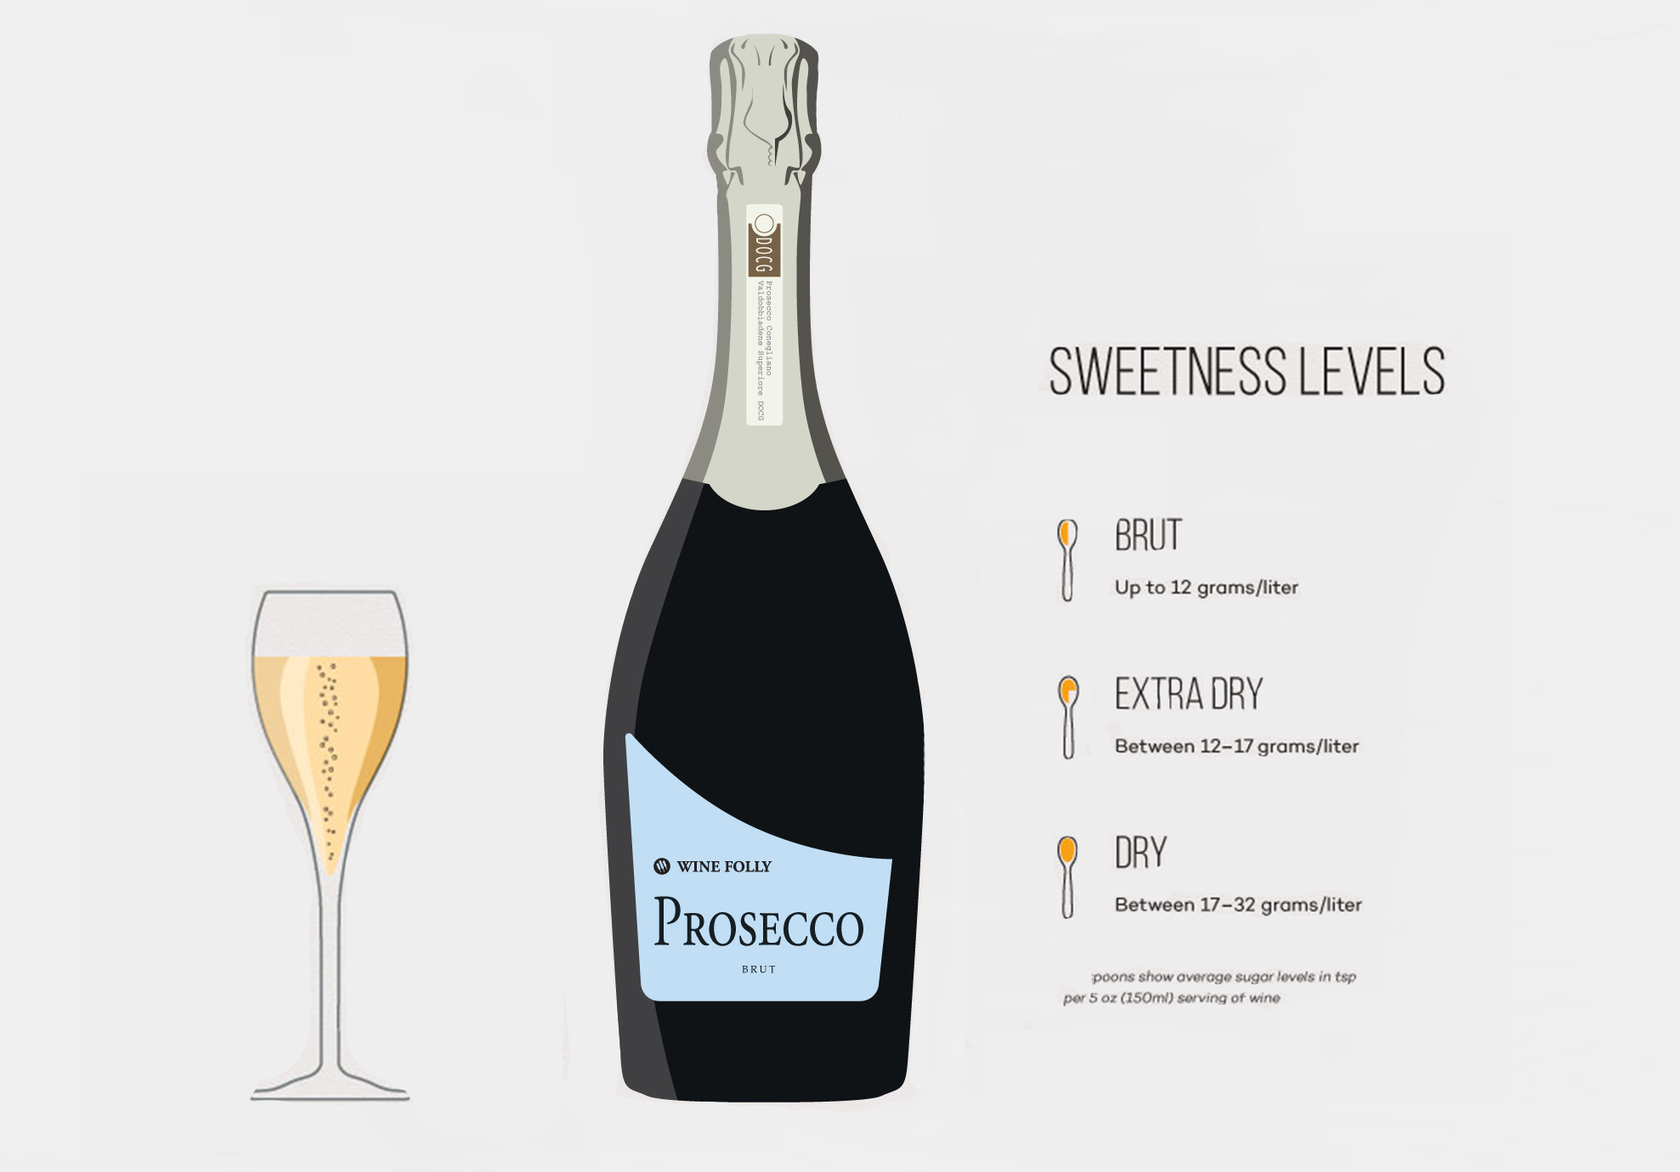 Prosecco denominazione di origine controllata. Классификация игристых вин Просекко. Красное игристое вино Просекко. Содержание сахара в Просекко. Игристое вино Prosecco.